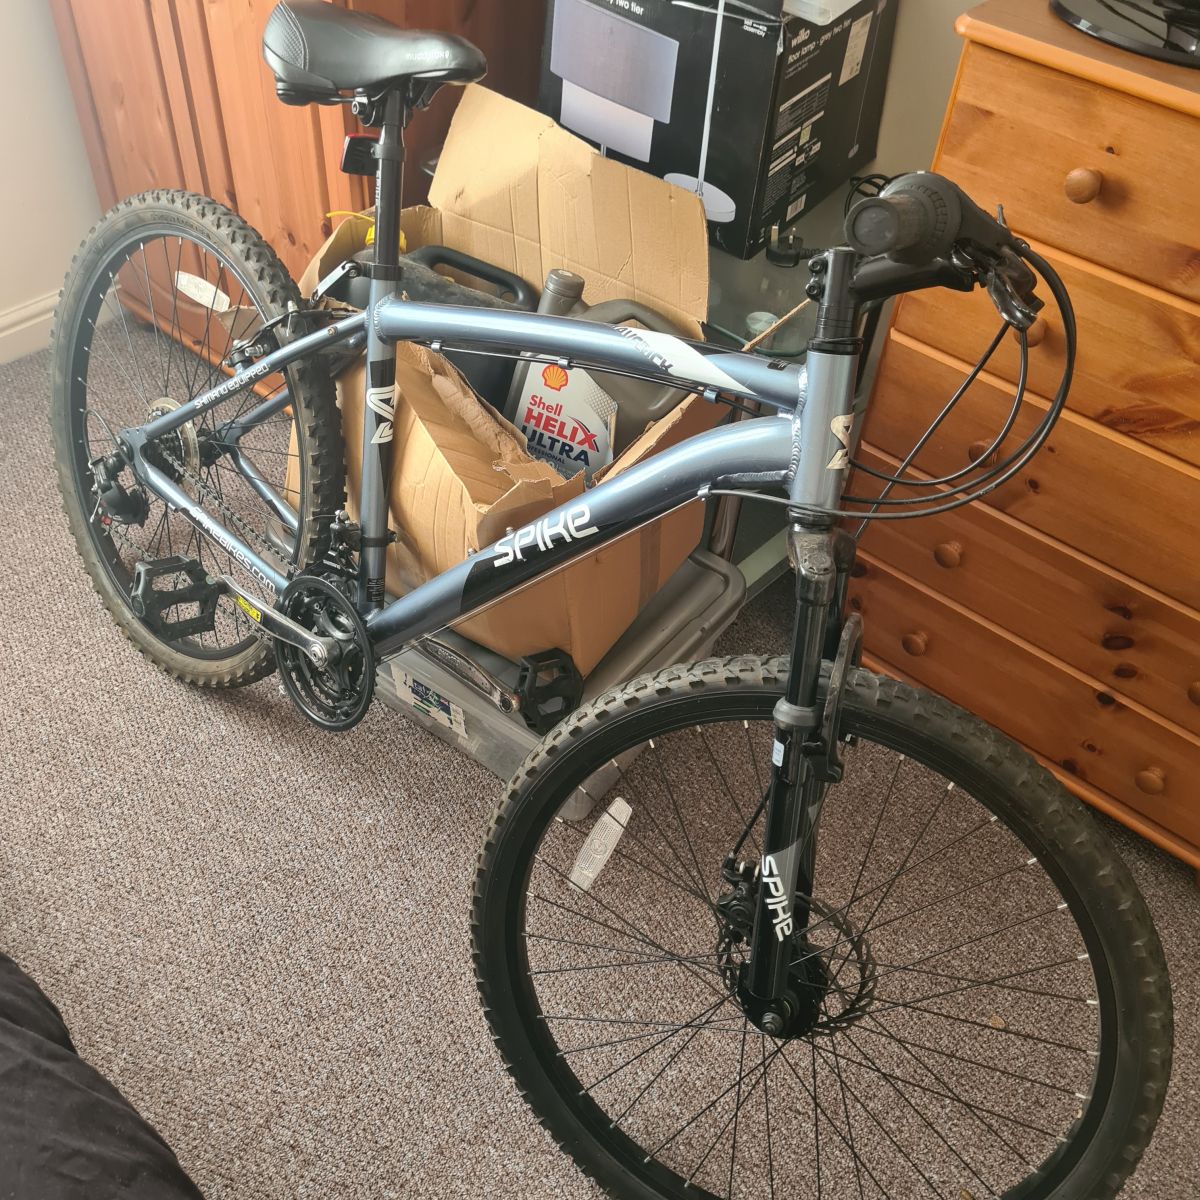 Spike mountain bike